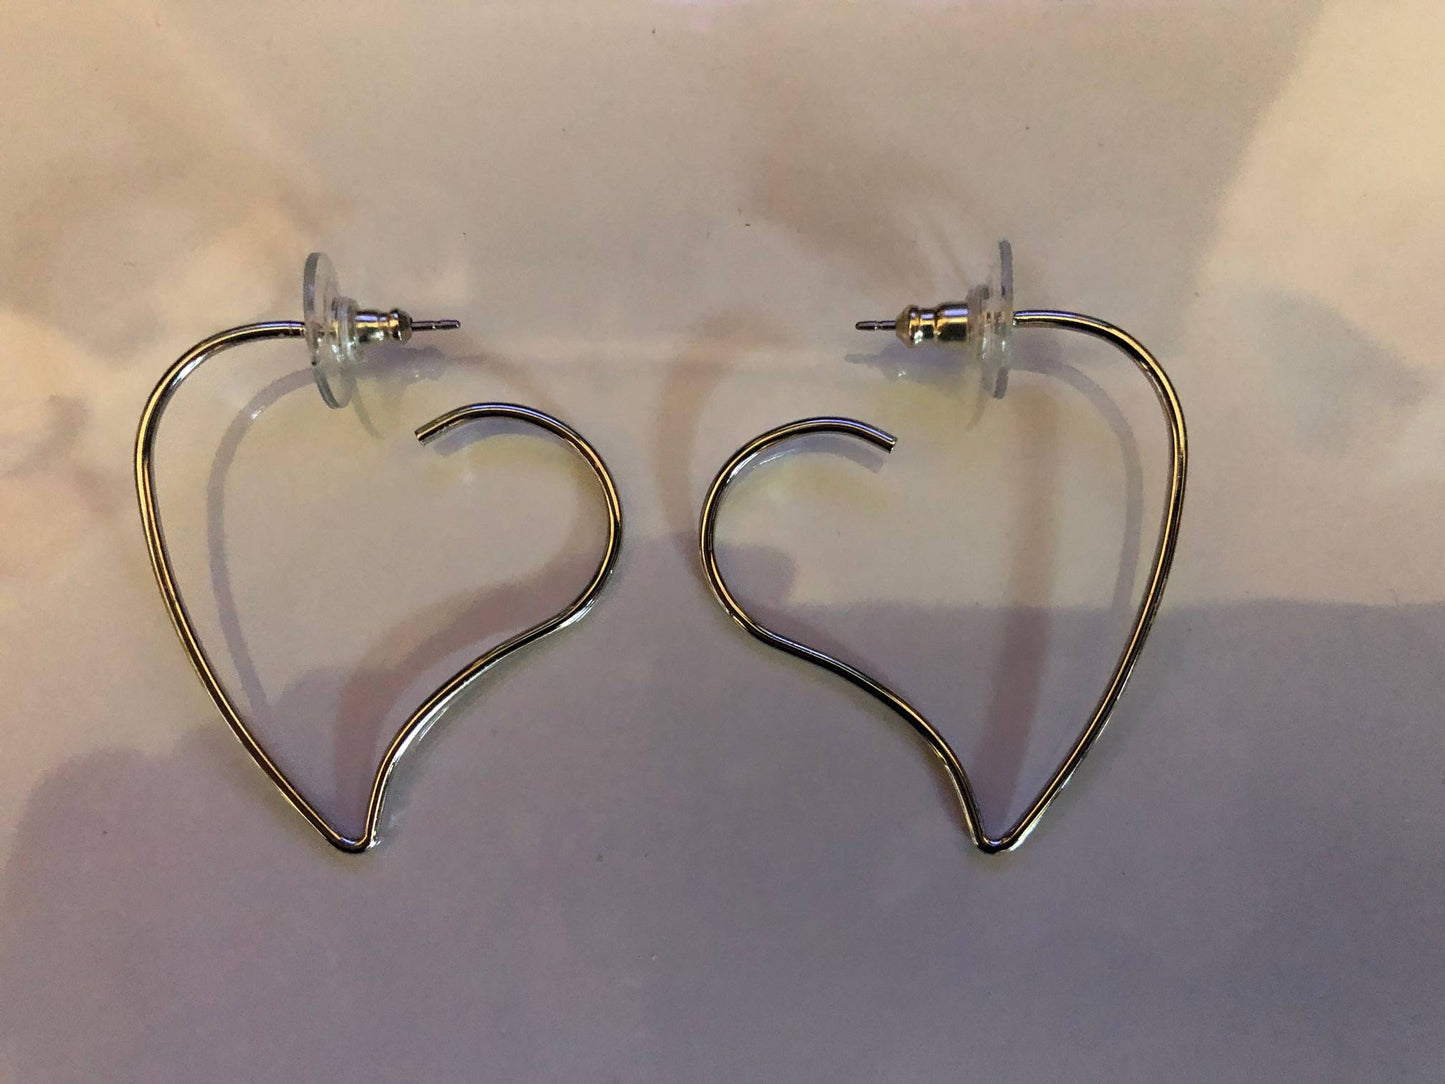 Heart Shaped Wire Earrings Gold, Silver, or Black